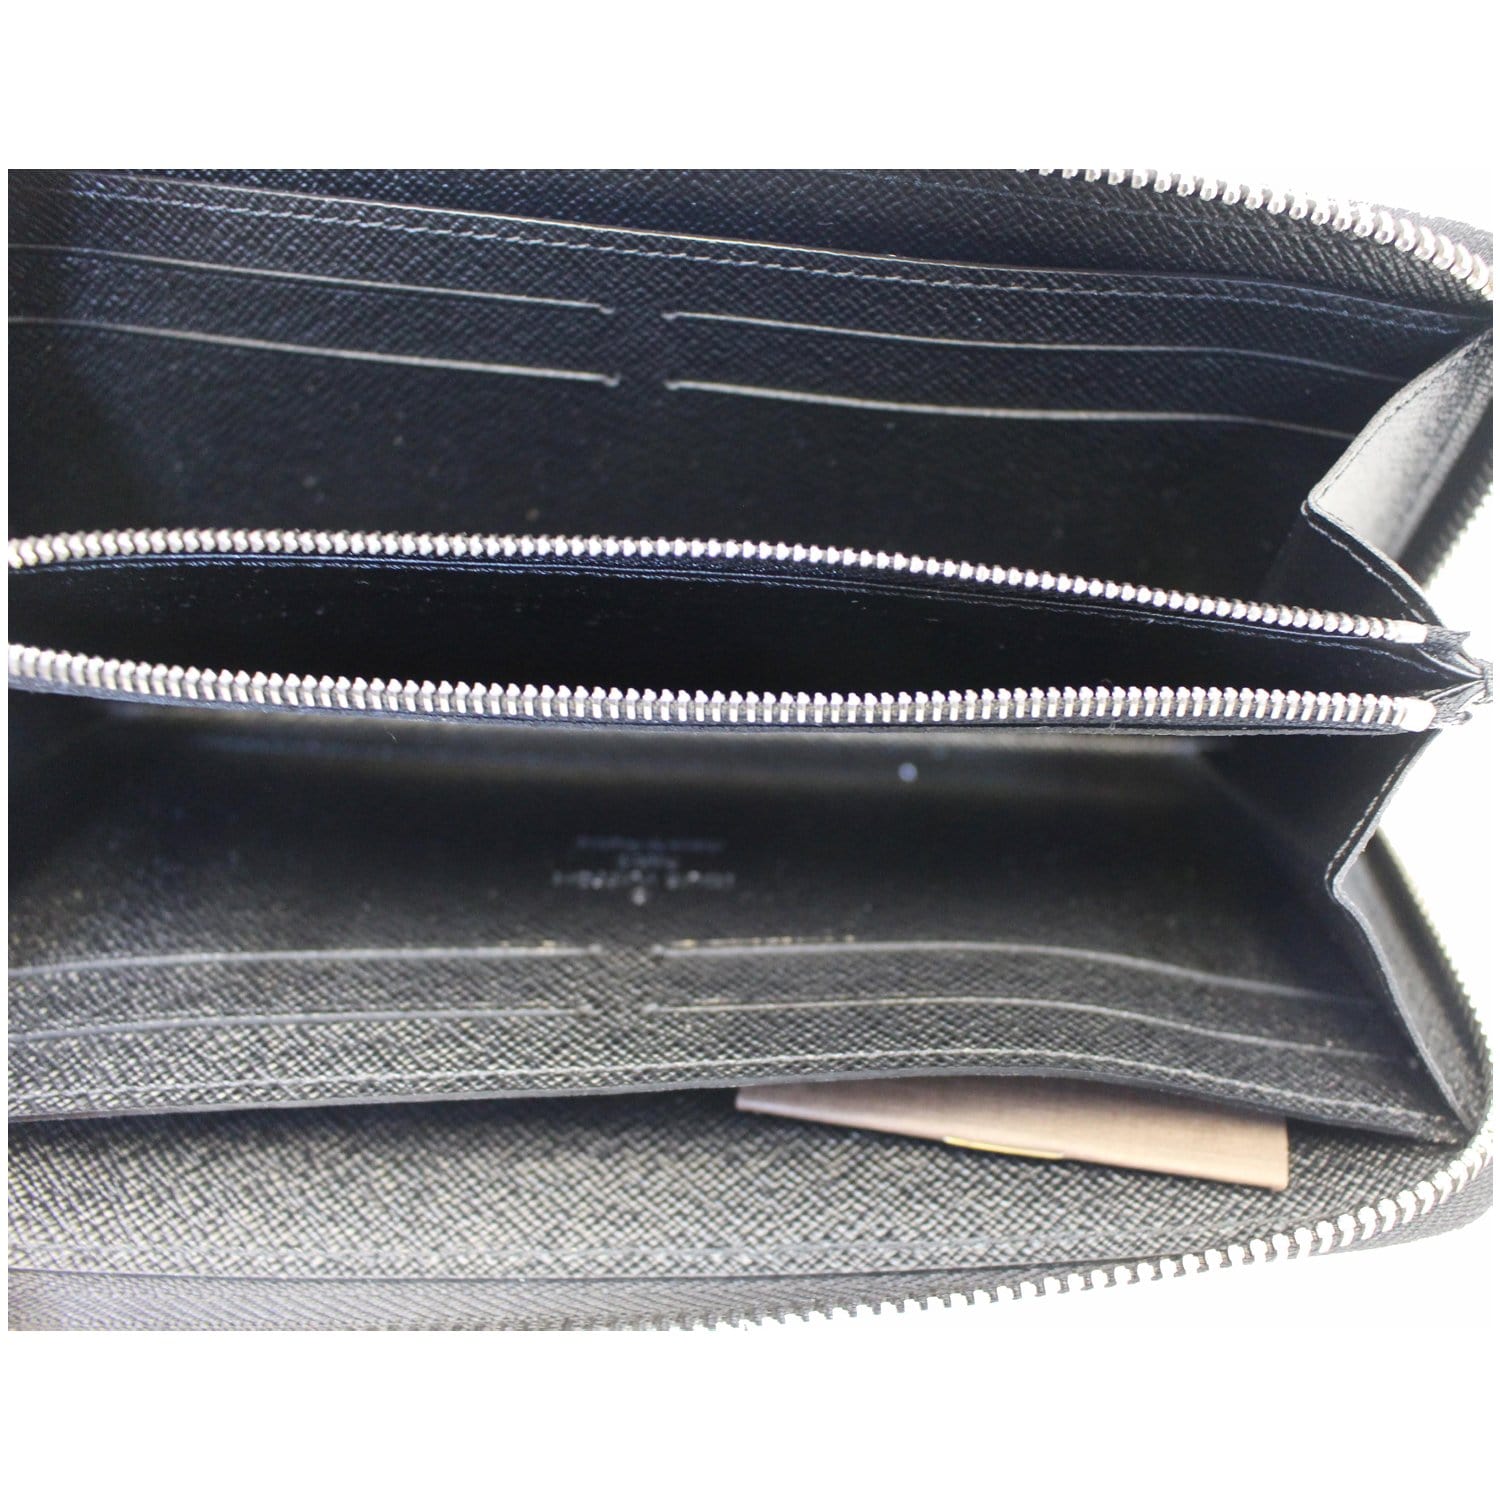 Louis Vuitton Epi Clemence Wallet M60915 Women's Epi Leather Long